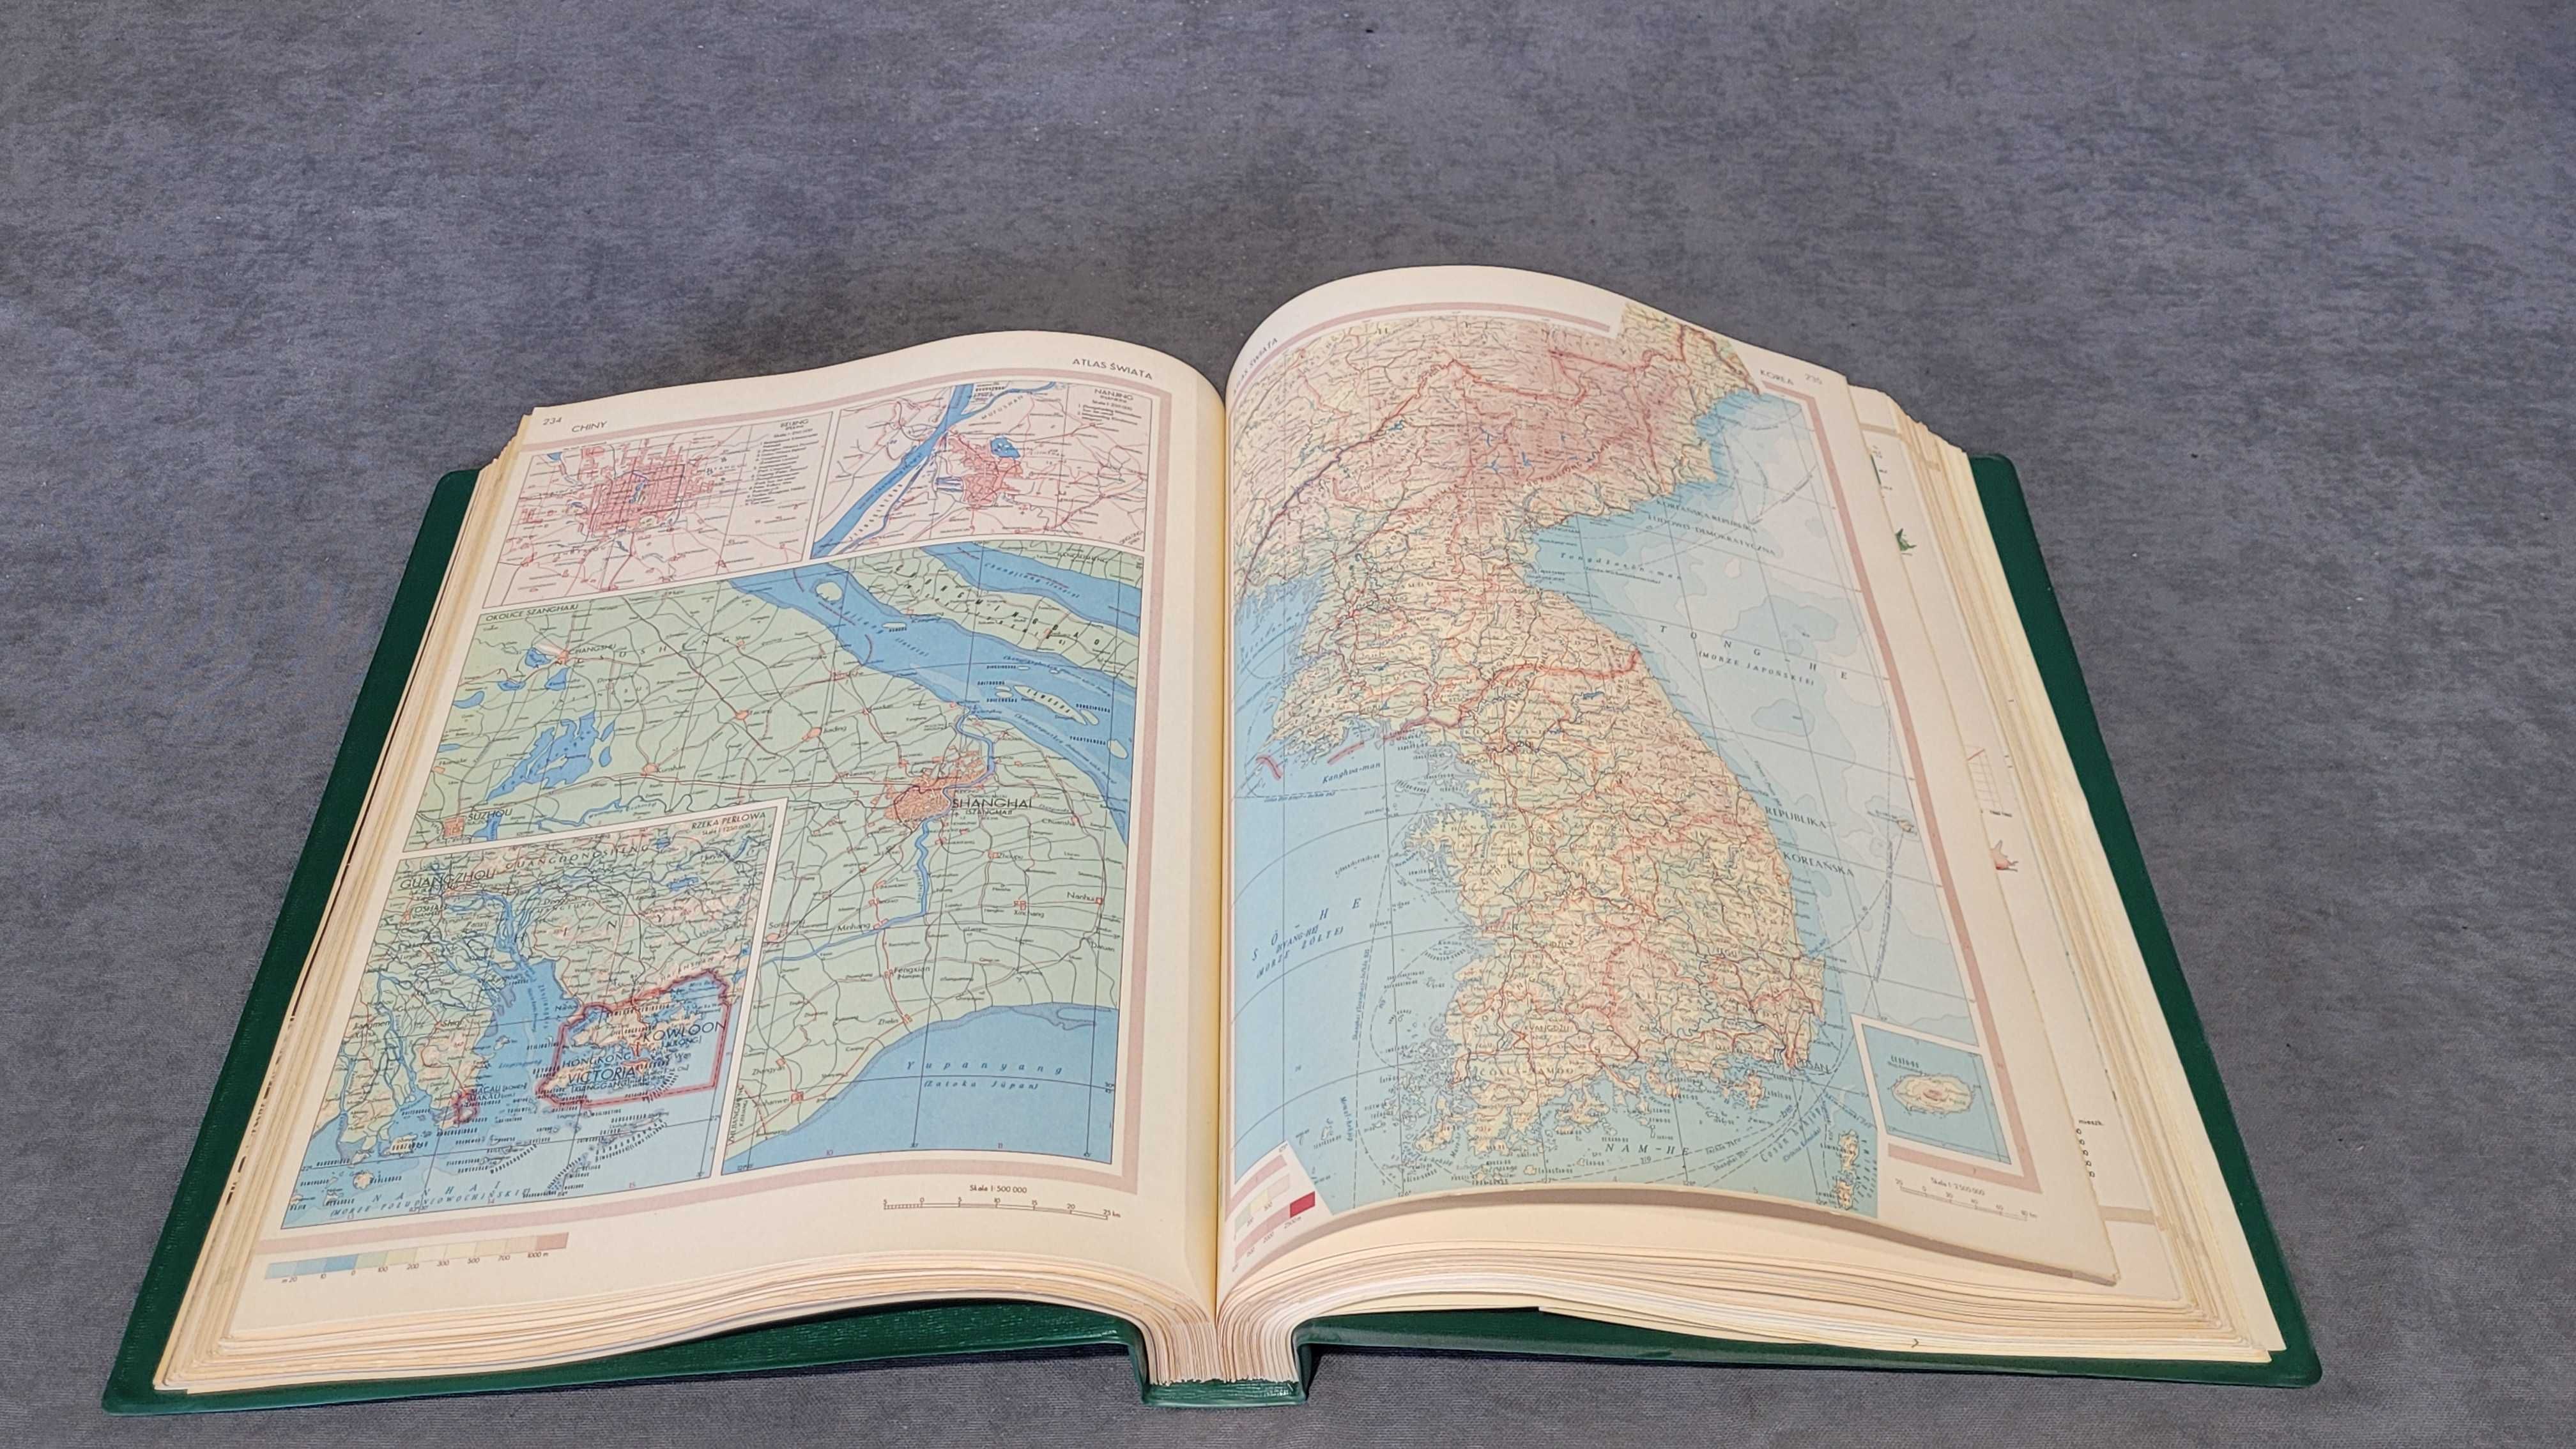 Bardzo duży Atlas Świata 1962 rok.